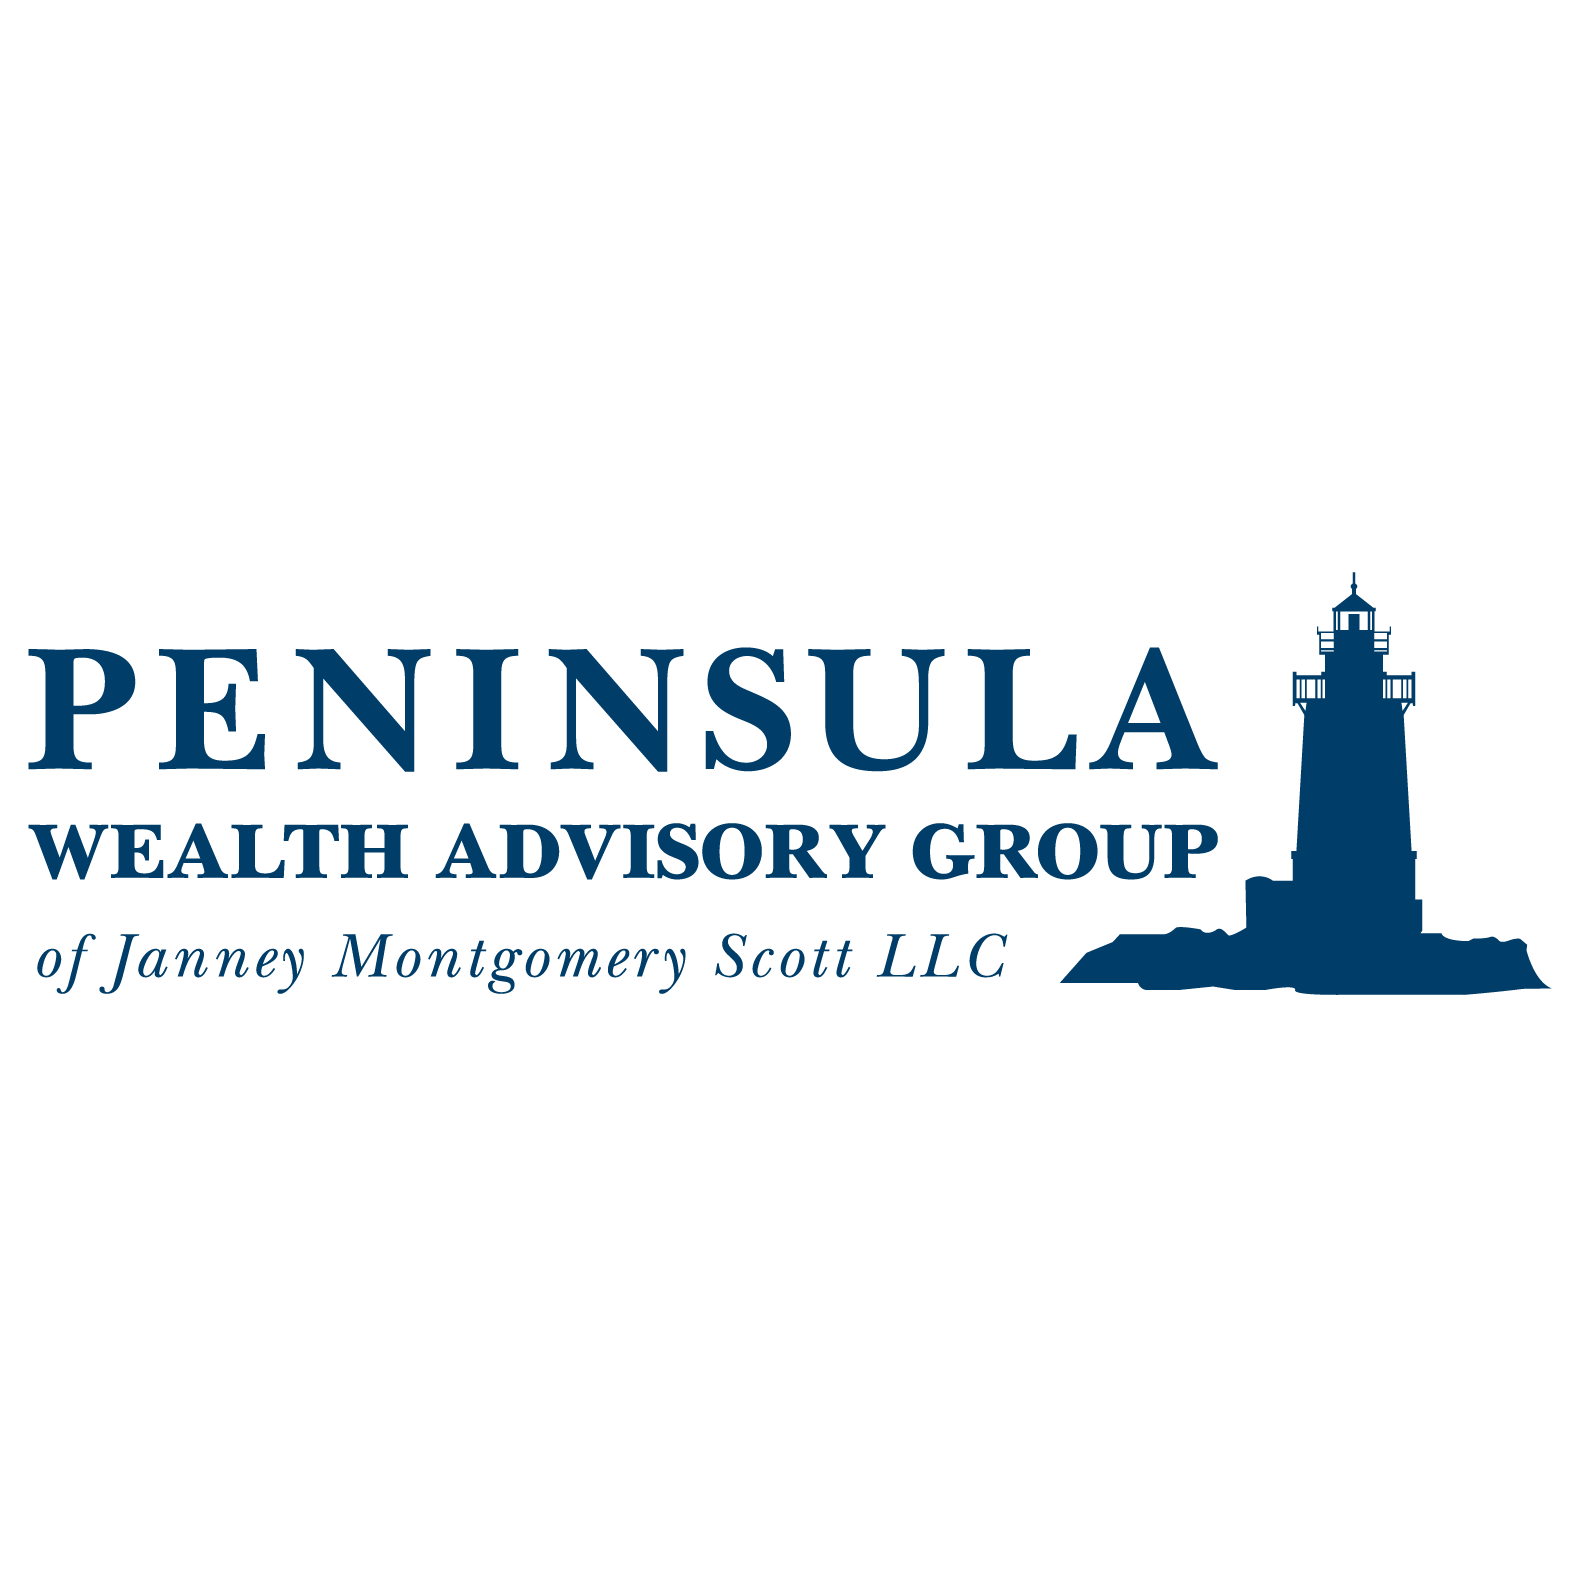 Peninsula Wealth Advisory Group of Janney Montgomery Scott